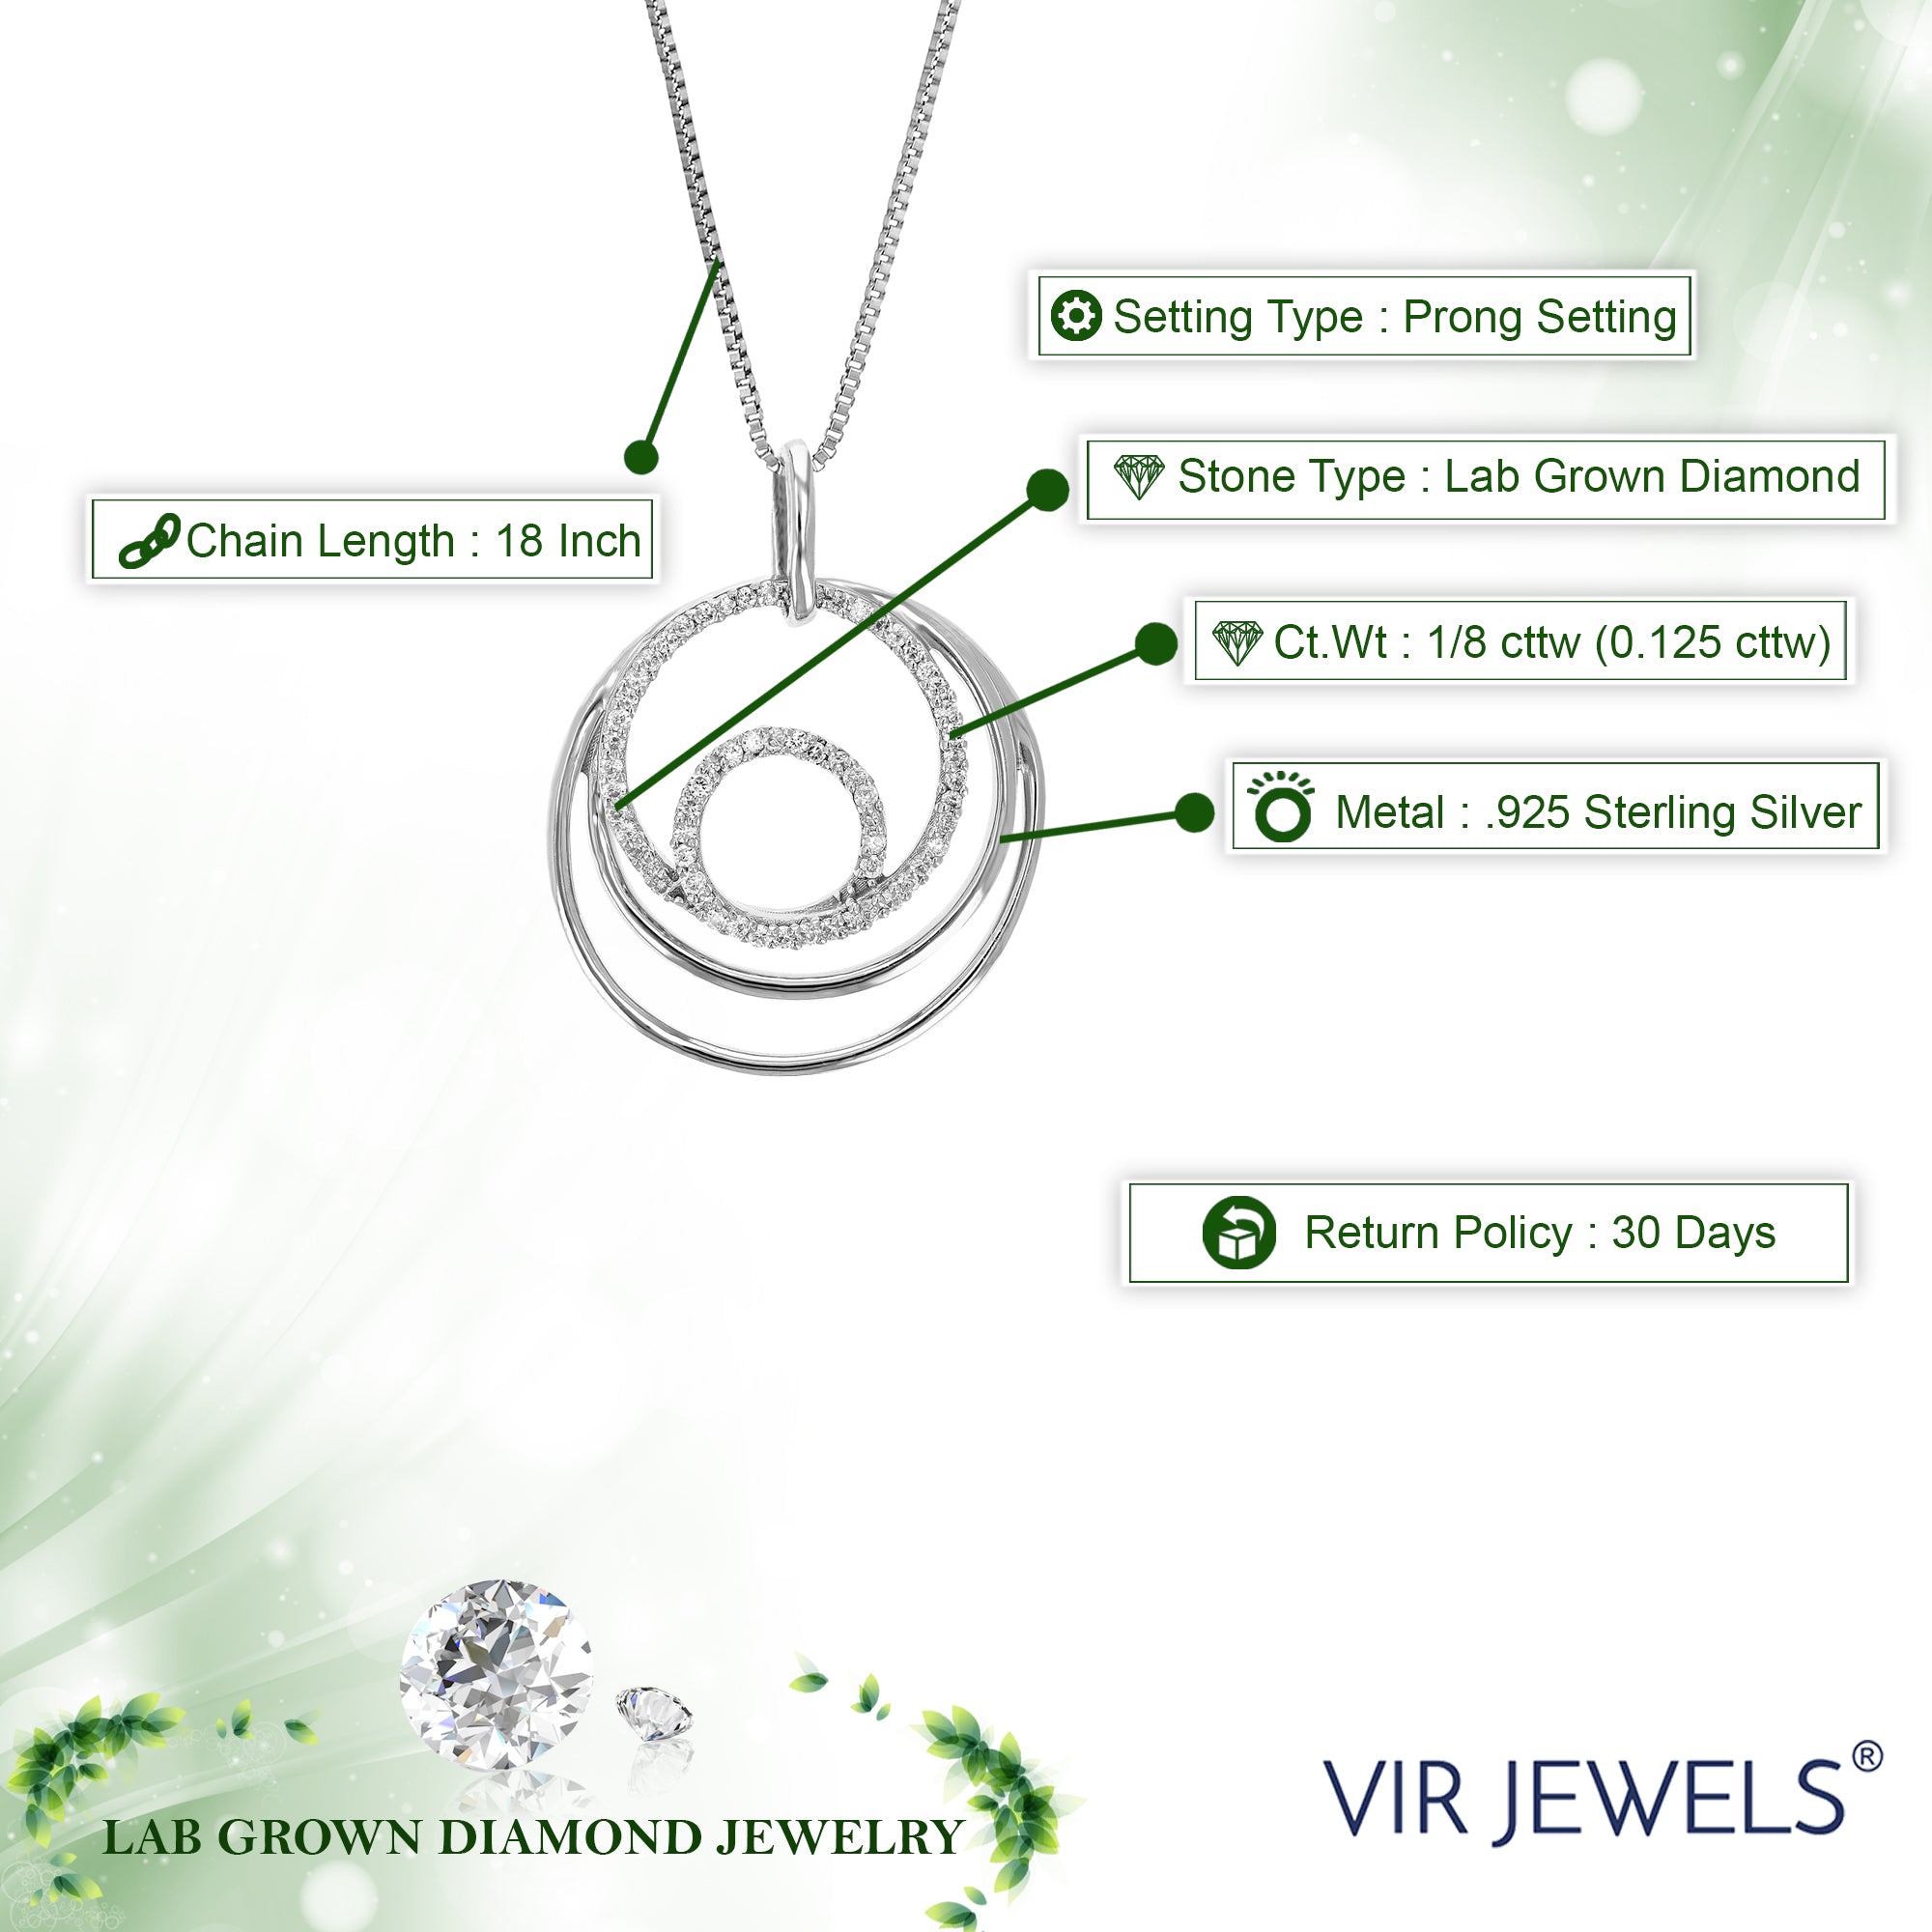 1/8 cttw Diamond Pendant Necklace for Women, Lab Grown Diamond Pendant Necklace in .925 Sterling Silver with Chain, Size 2/3 Inch